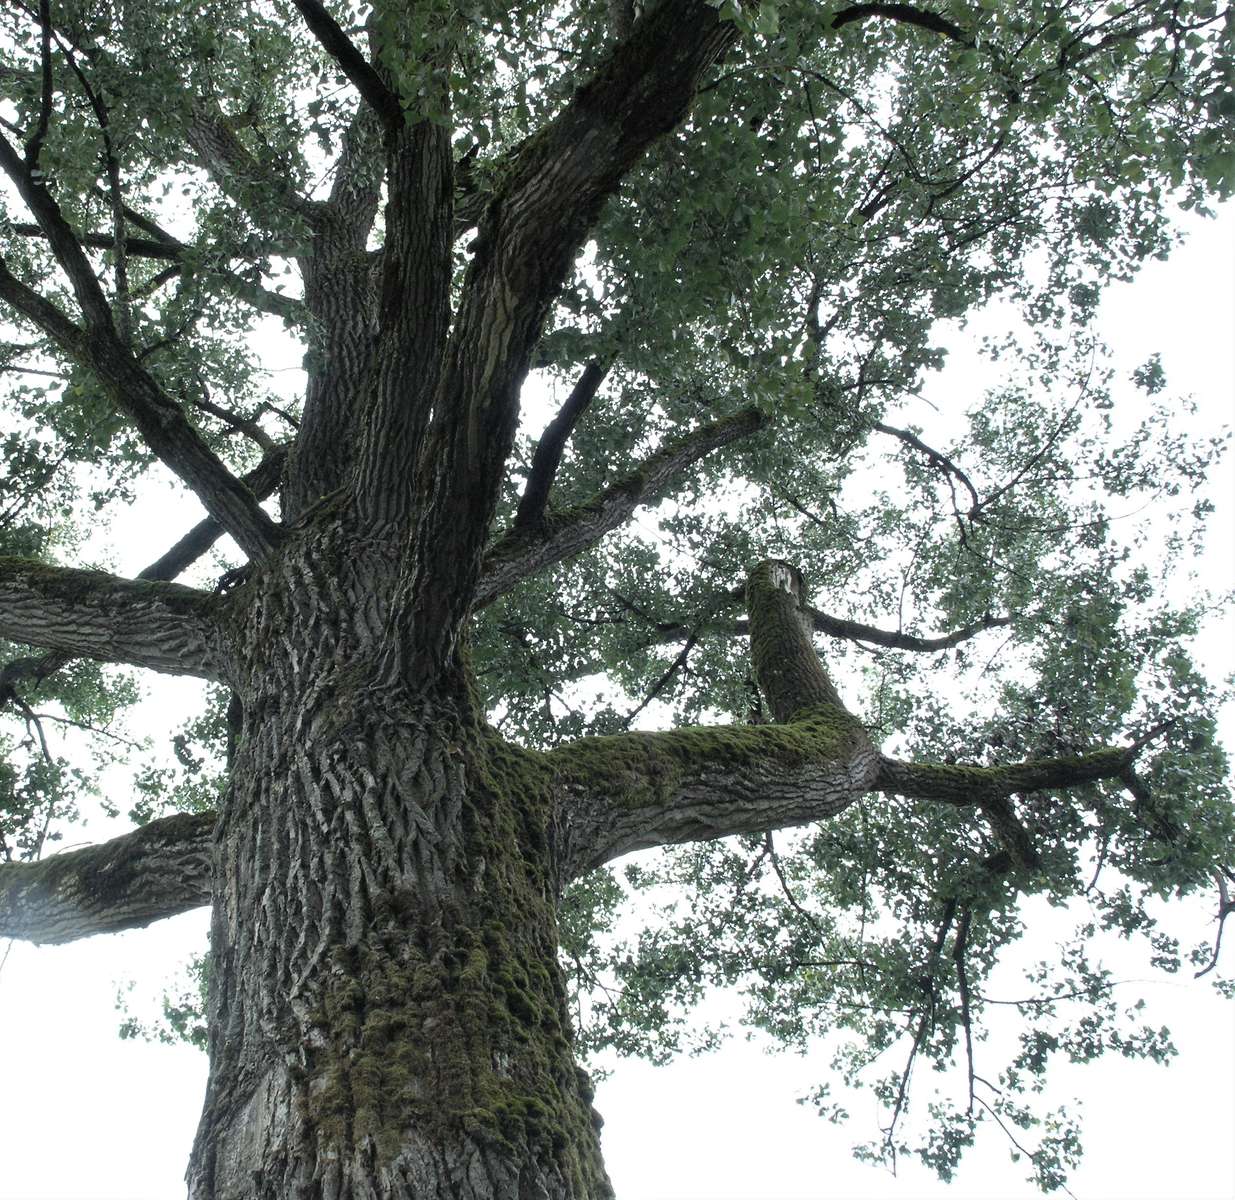 So fest im Leben wie ein Baum пазл онлайн из фото